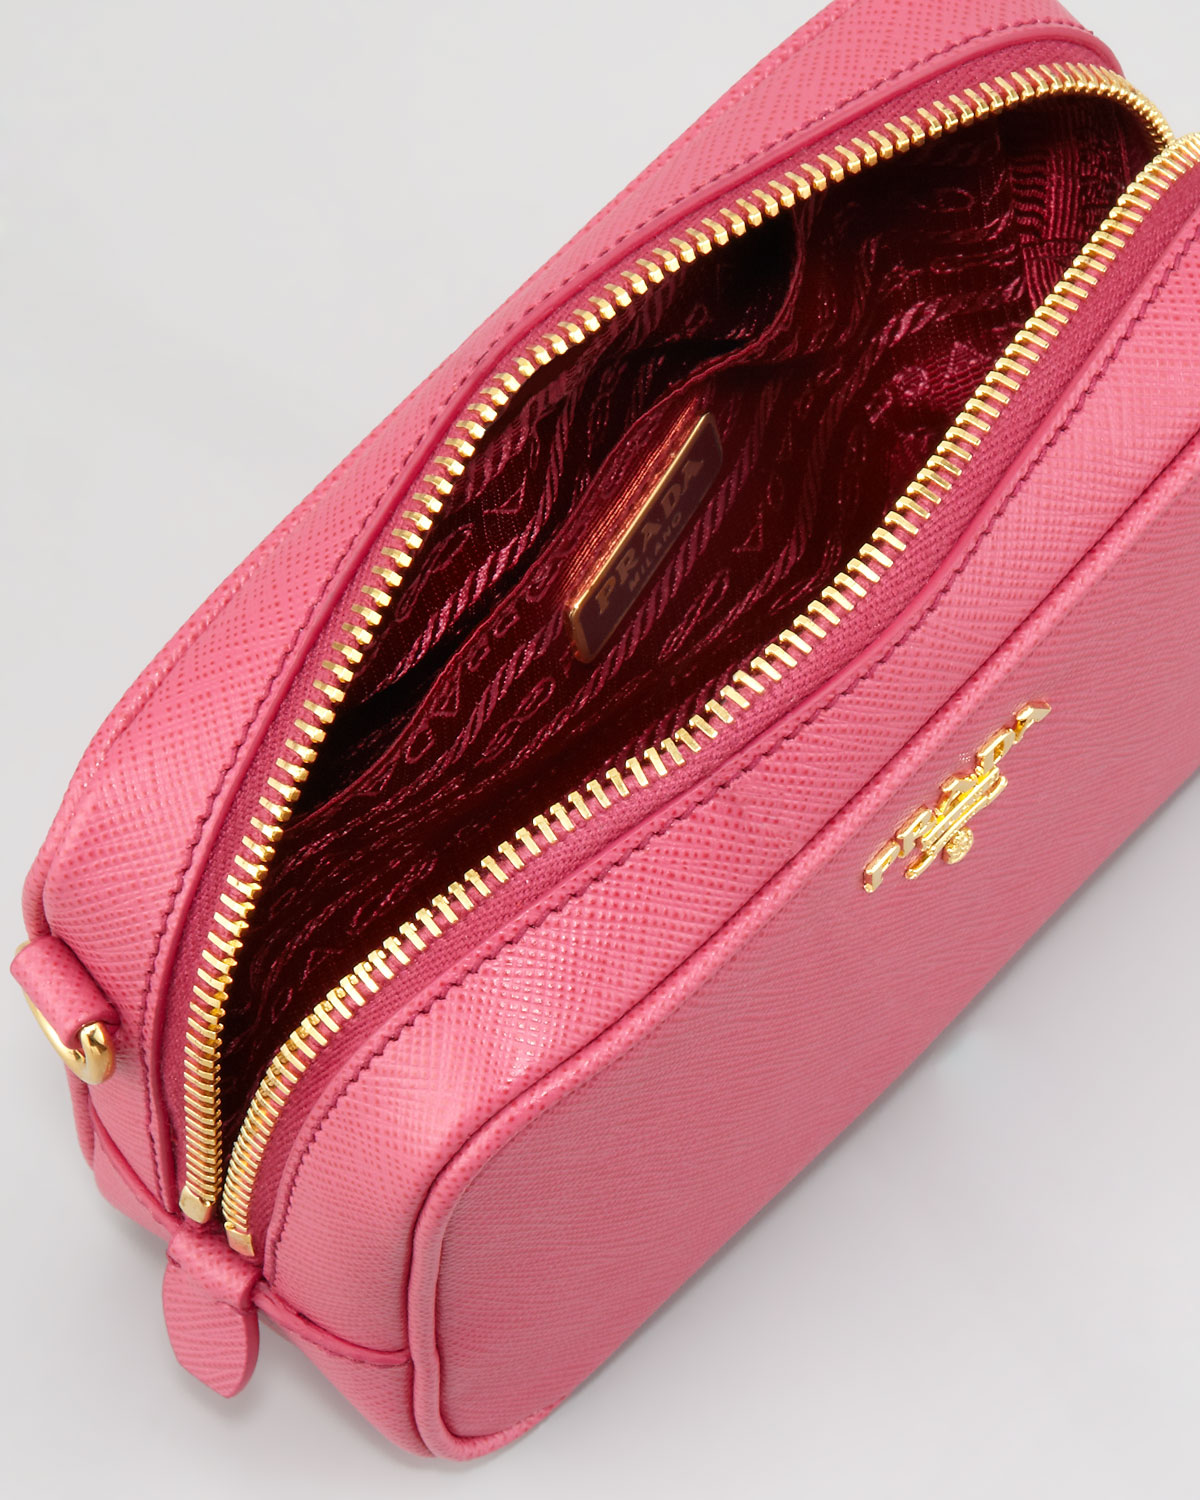 Prada Saffiano Mini Zip Crossbody Bag in Pink - Lyst